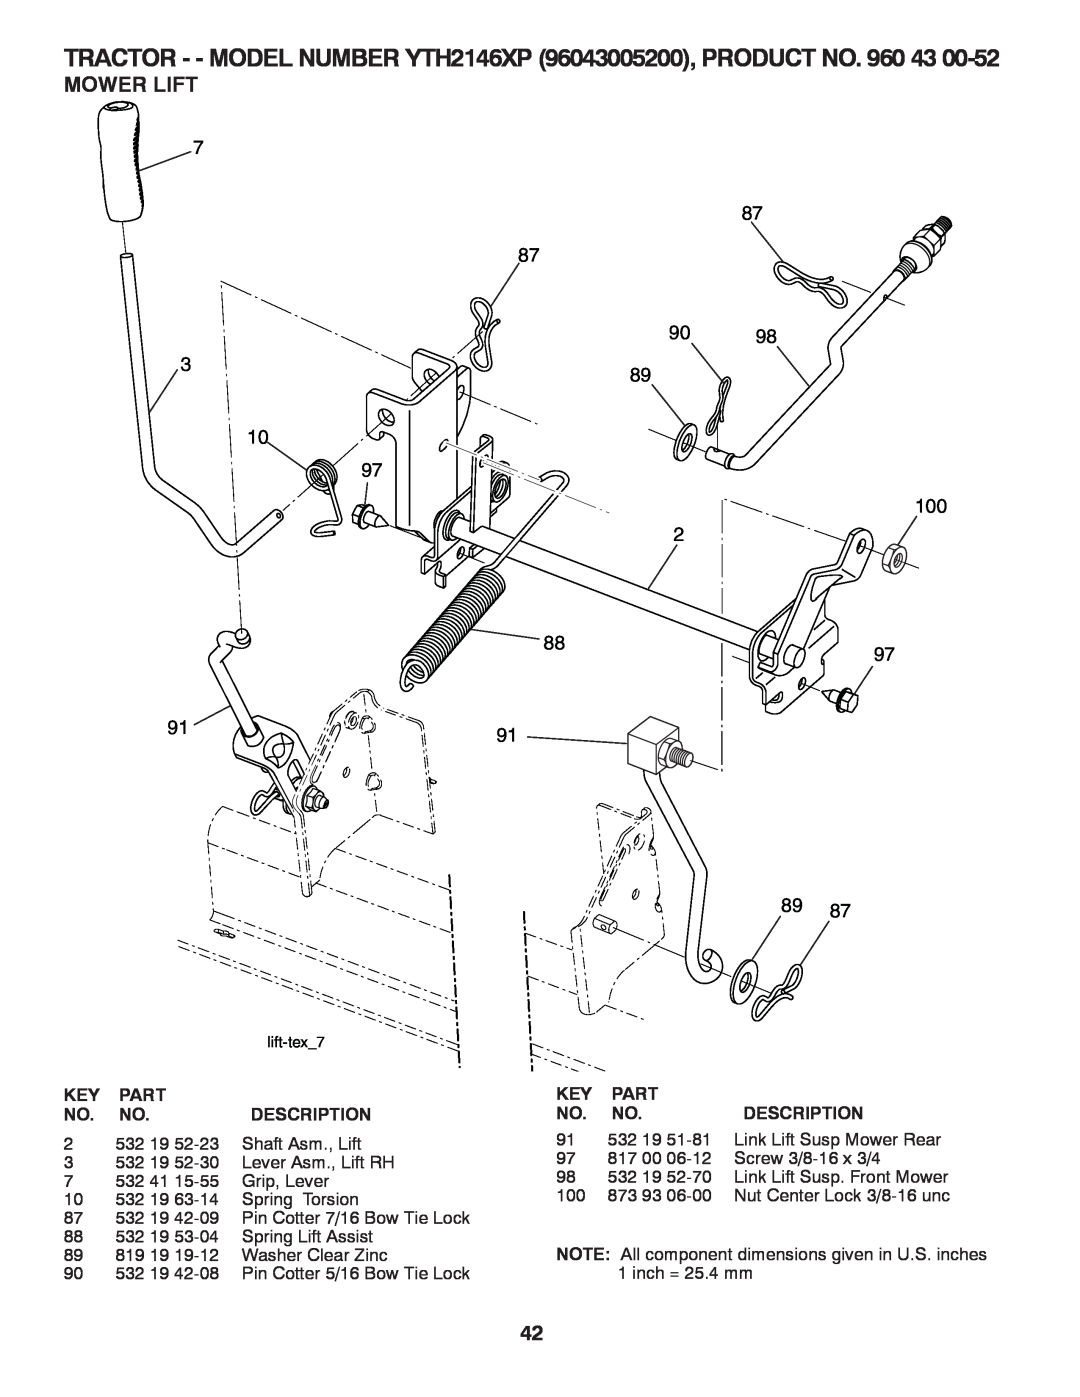 Husqvarna manual Mower Lift, TRACTOR - - MODEL NUMBER YTH2146XP 96043005200, PRODUCT NO. 960 43, Part, Description 